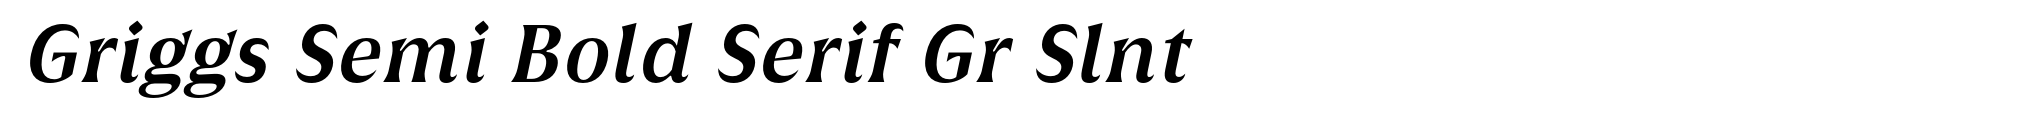 Griggs Semi Bold Serif Gr Slnt image